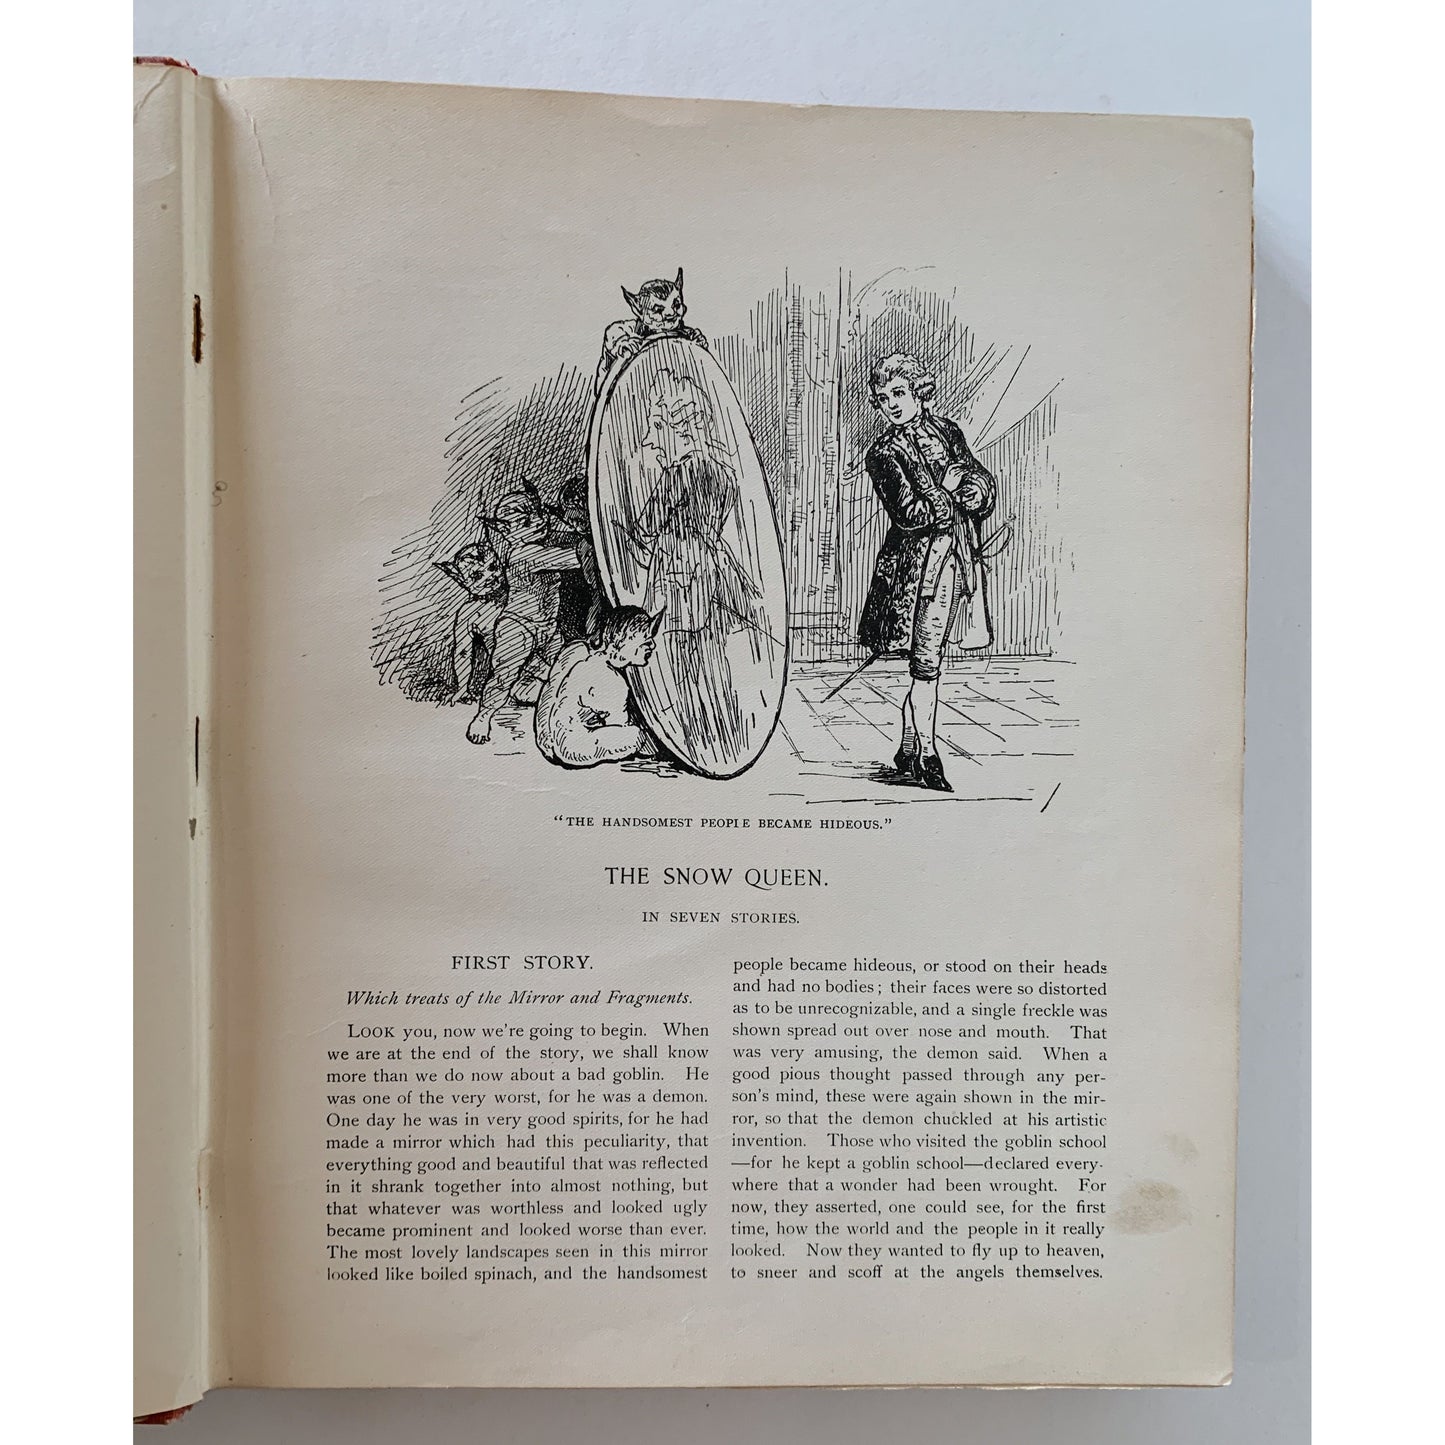 Hans Christian Andersen's Stories for the Household, 1895, Illustrated Antique Children's Book